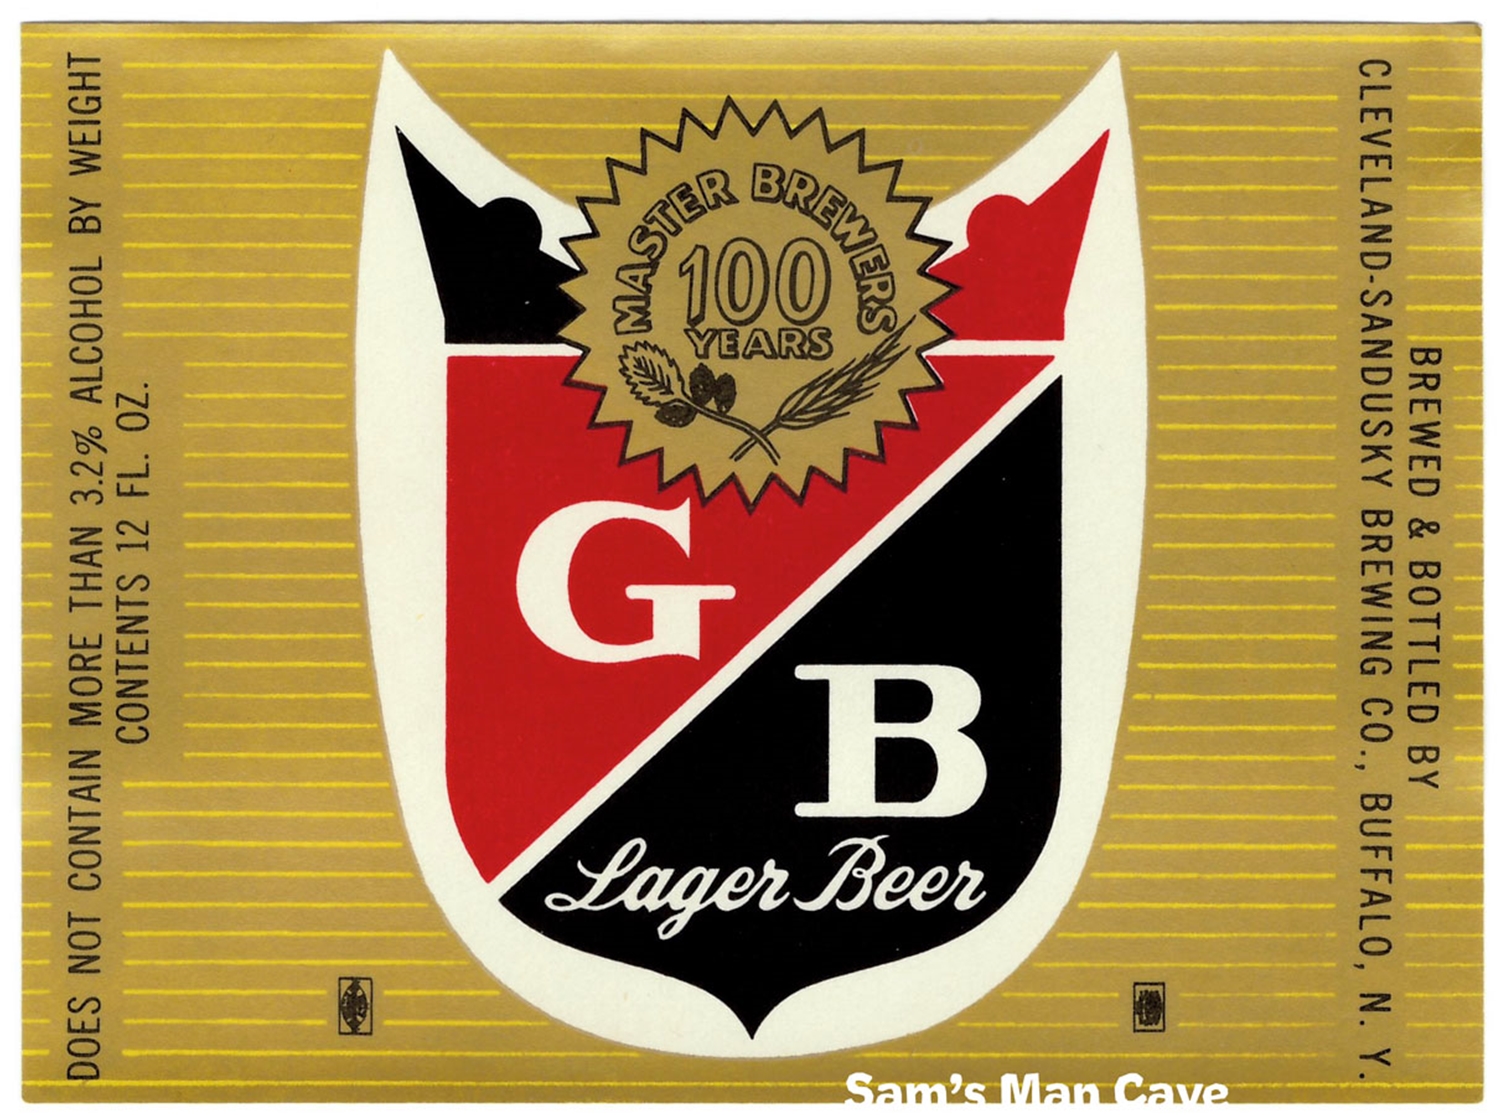 G B Lager Beer Label